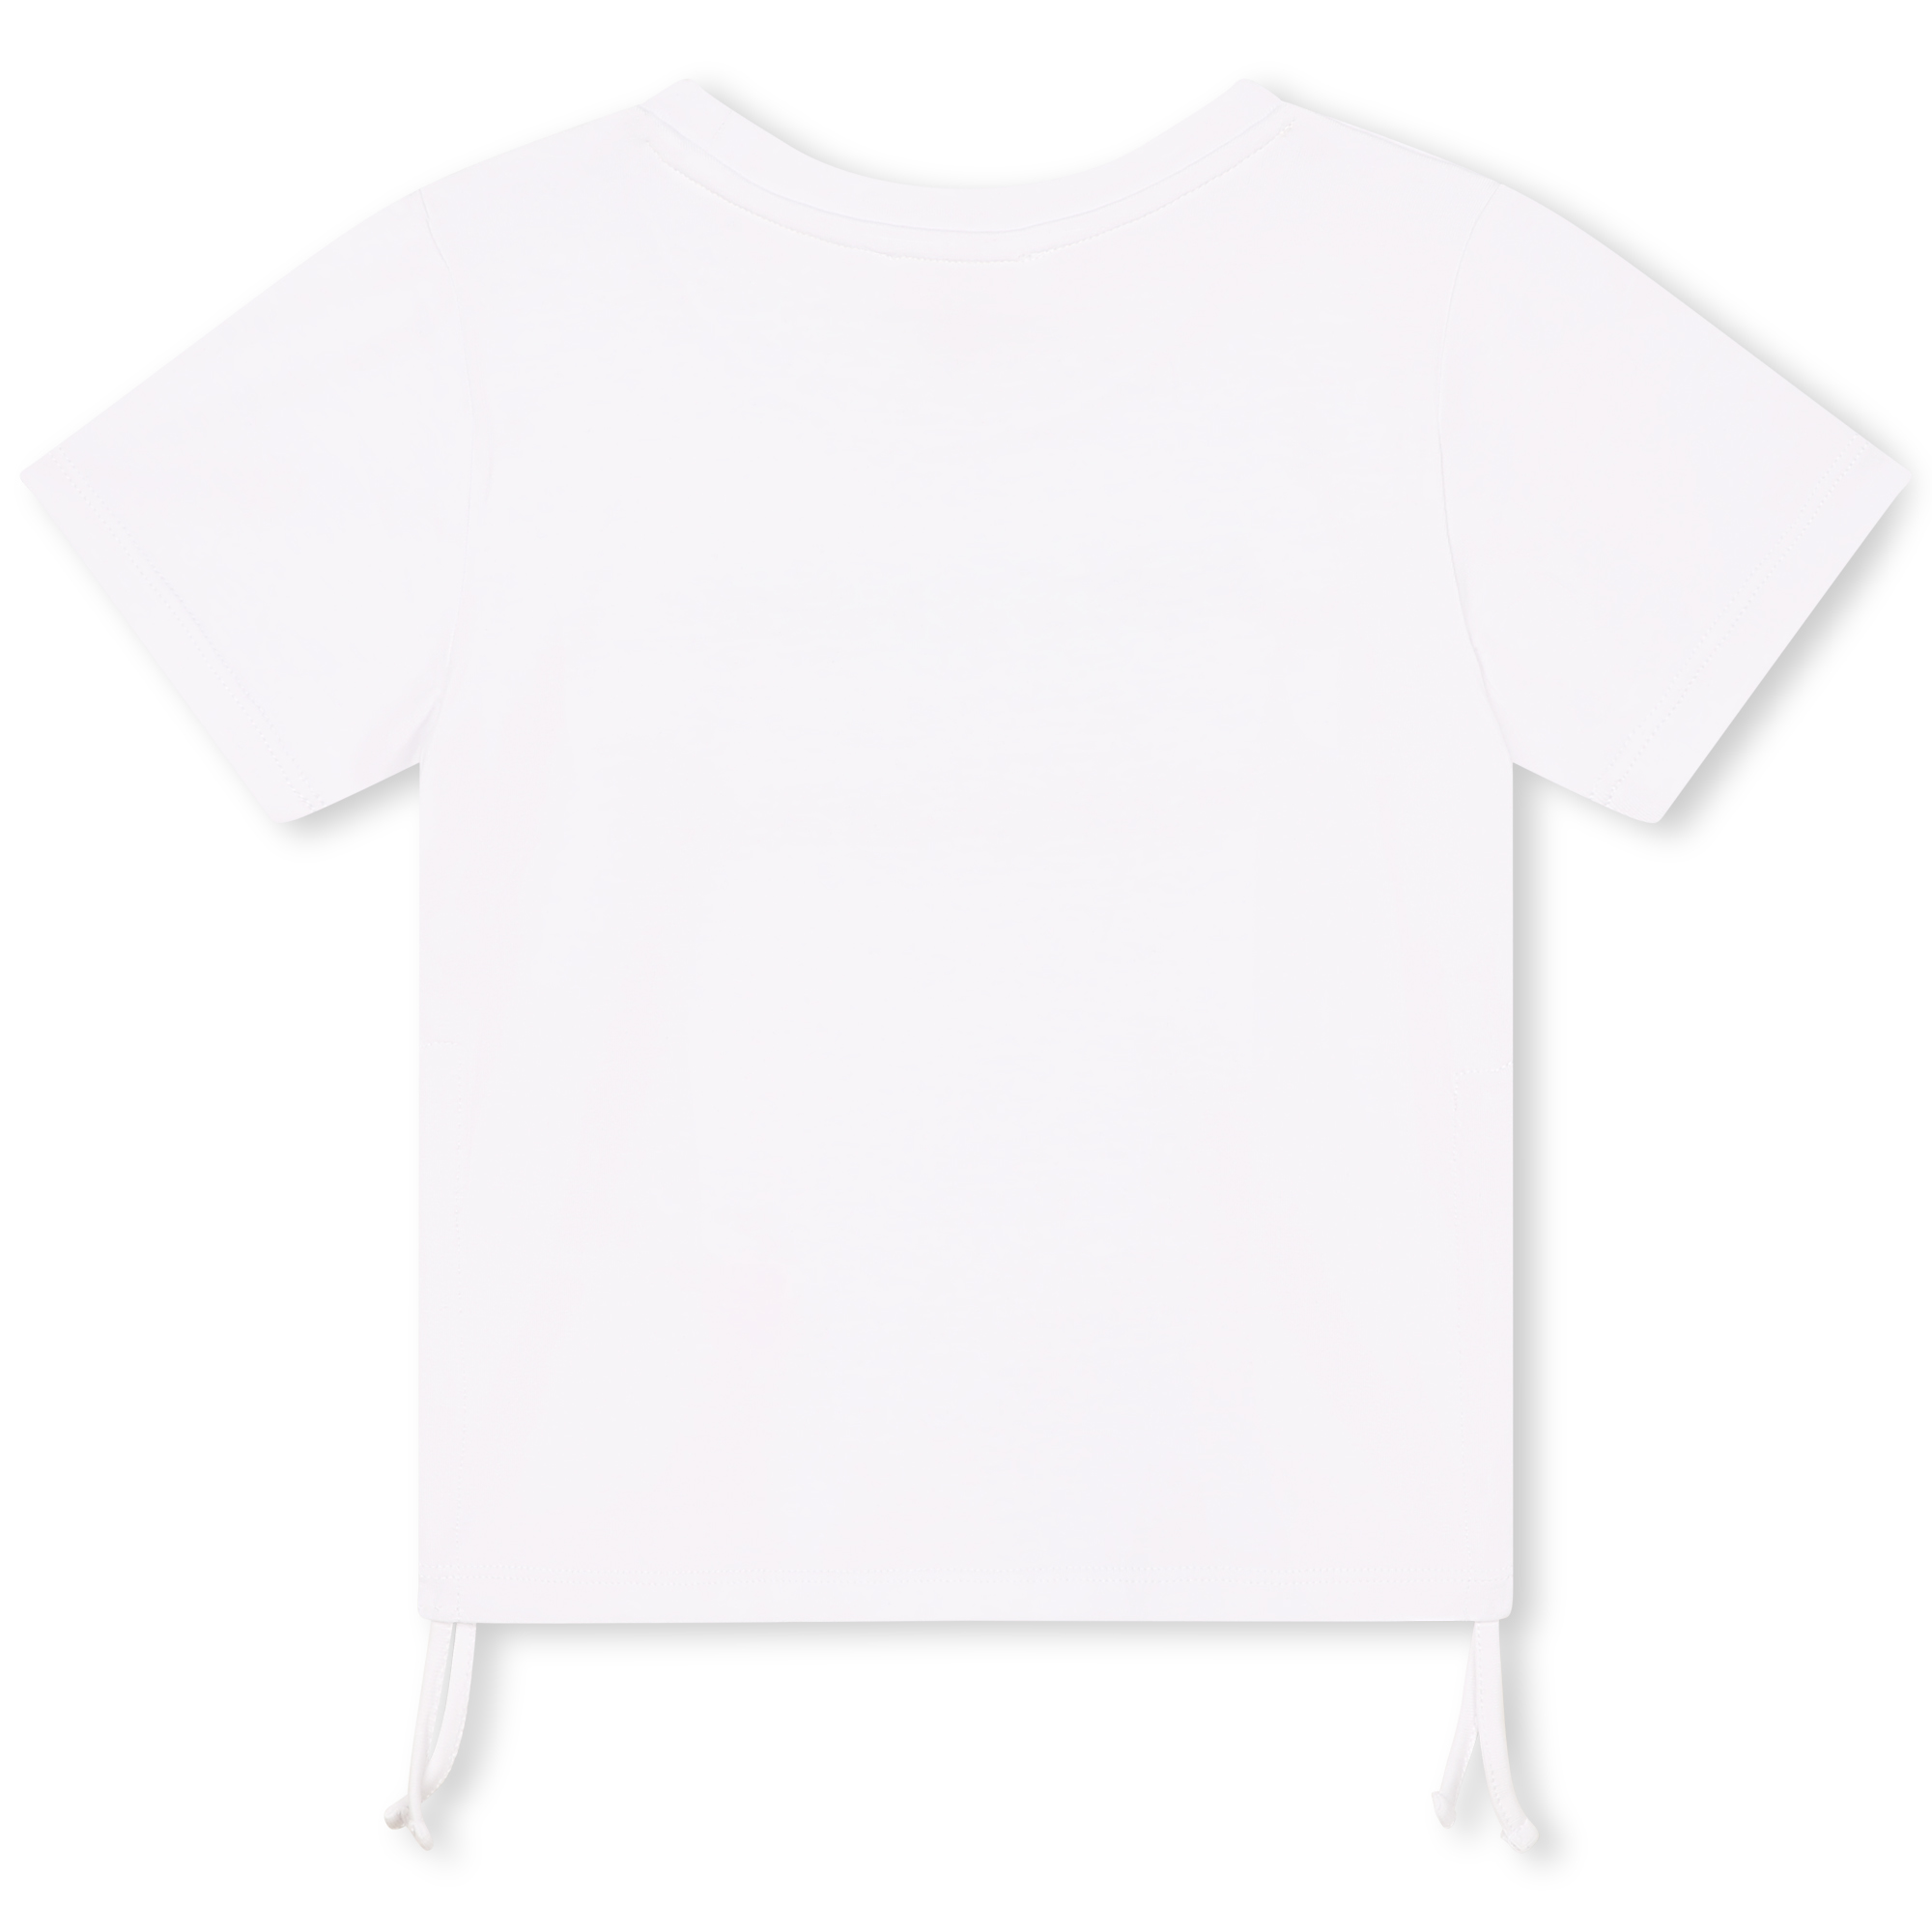 T-shirt with drawstrings MICHAEL KORS for GIRL